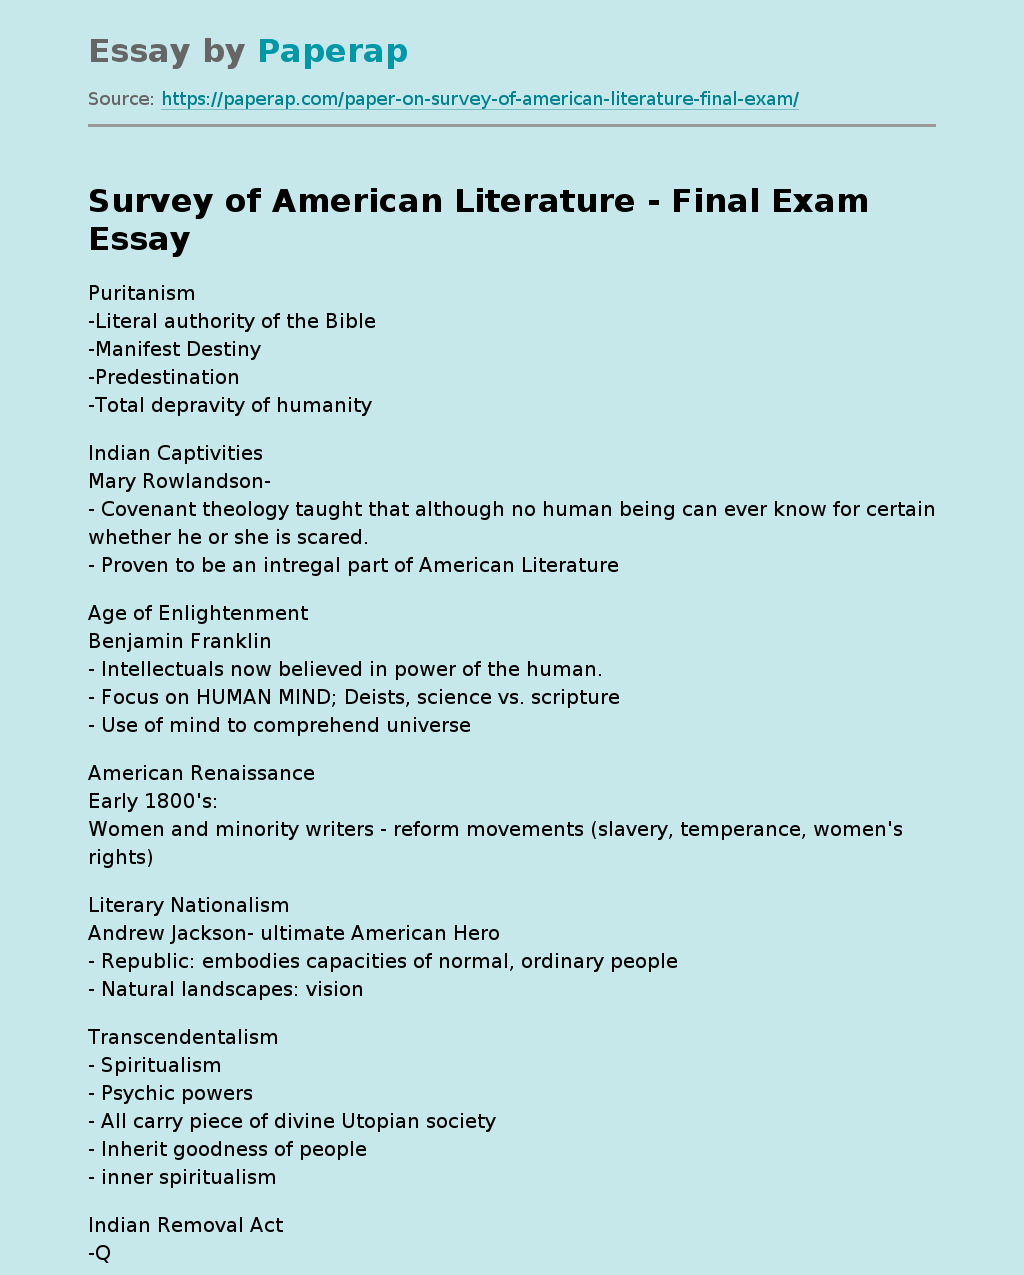 Survey of American Literature - Final Exam